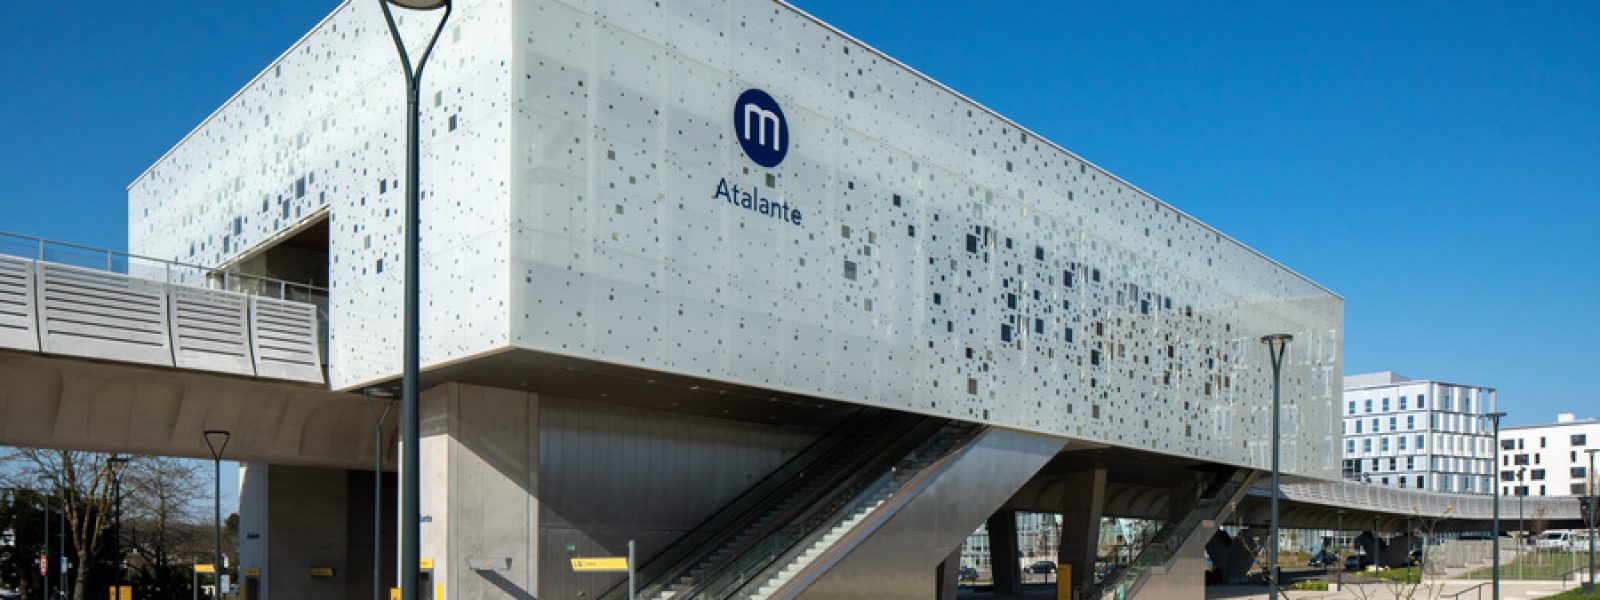 Station Atalante-ViaSilva ligne b